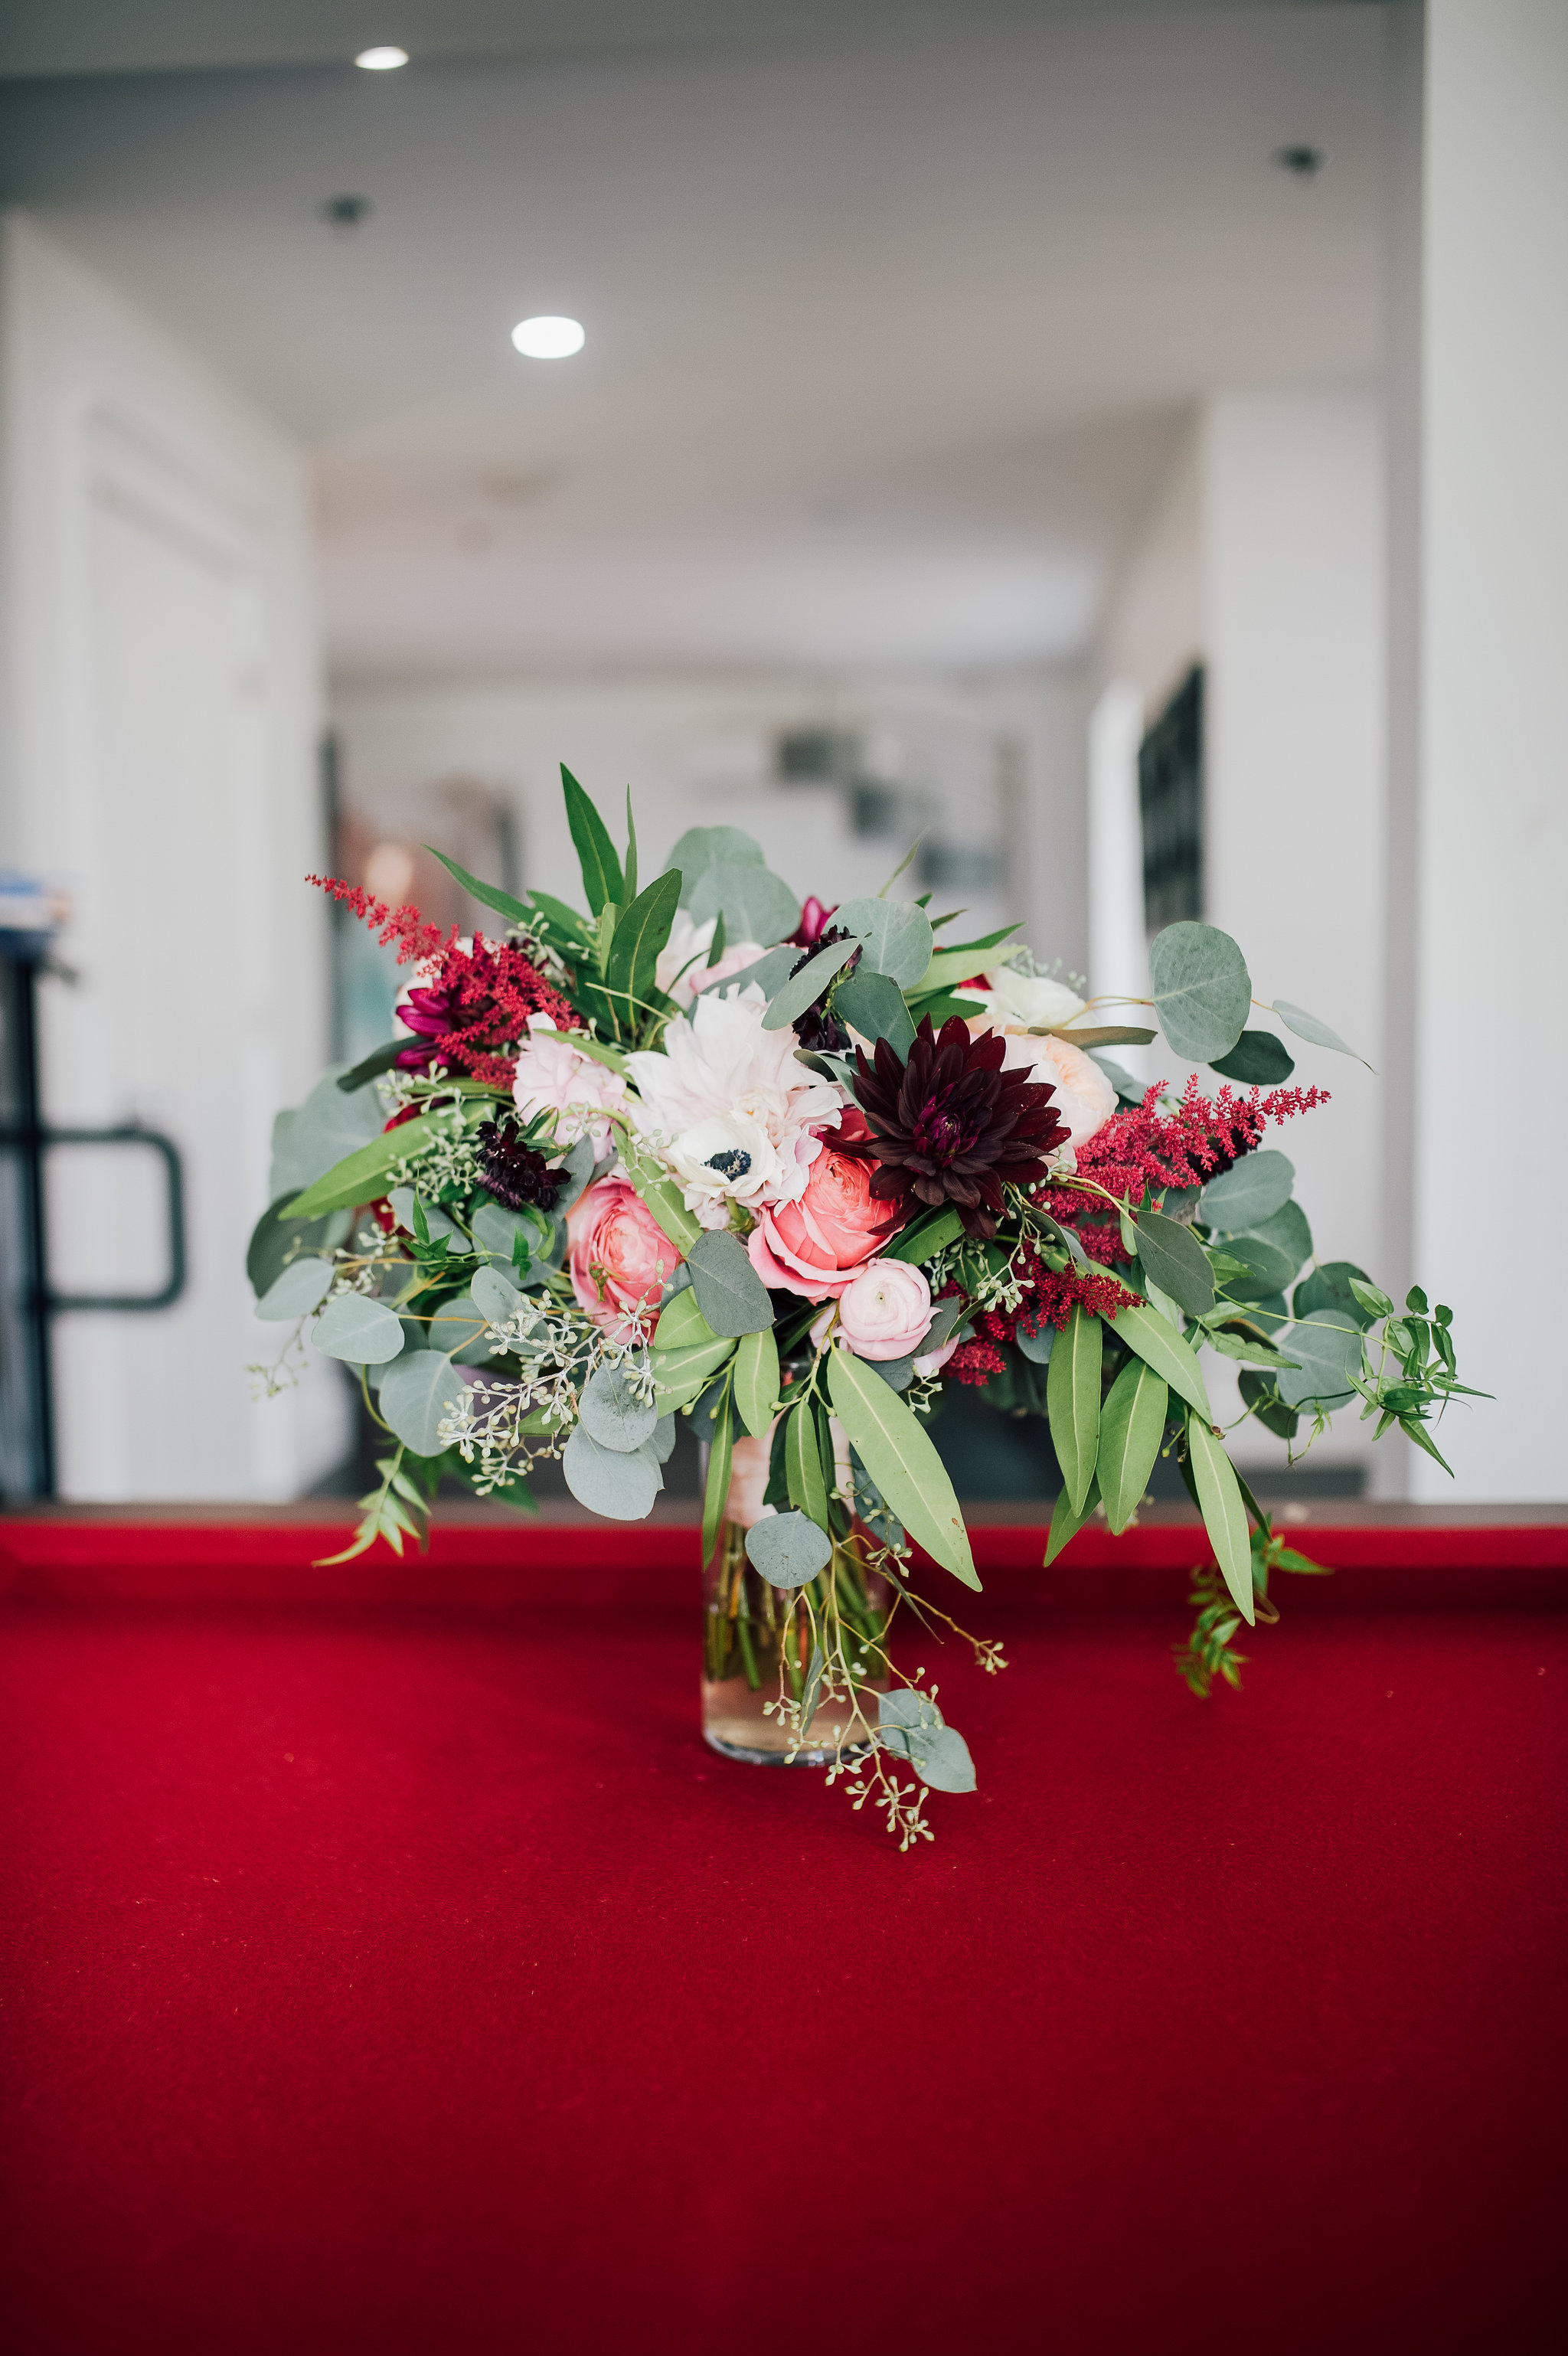 Wedding Bouquet Ideas from my 2017 Weddings by popular New York wedding Photographer Laurel Creative